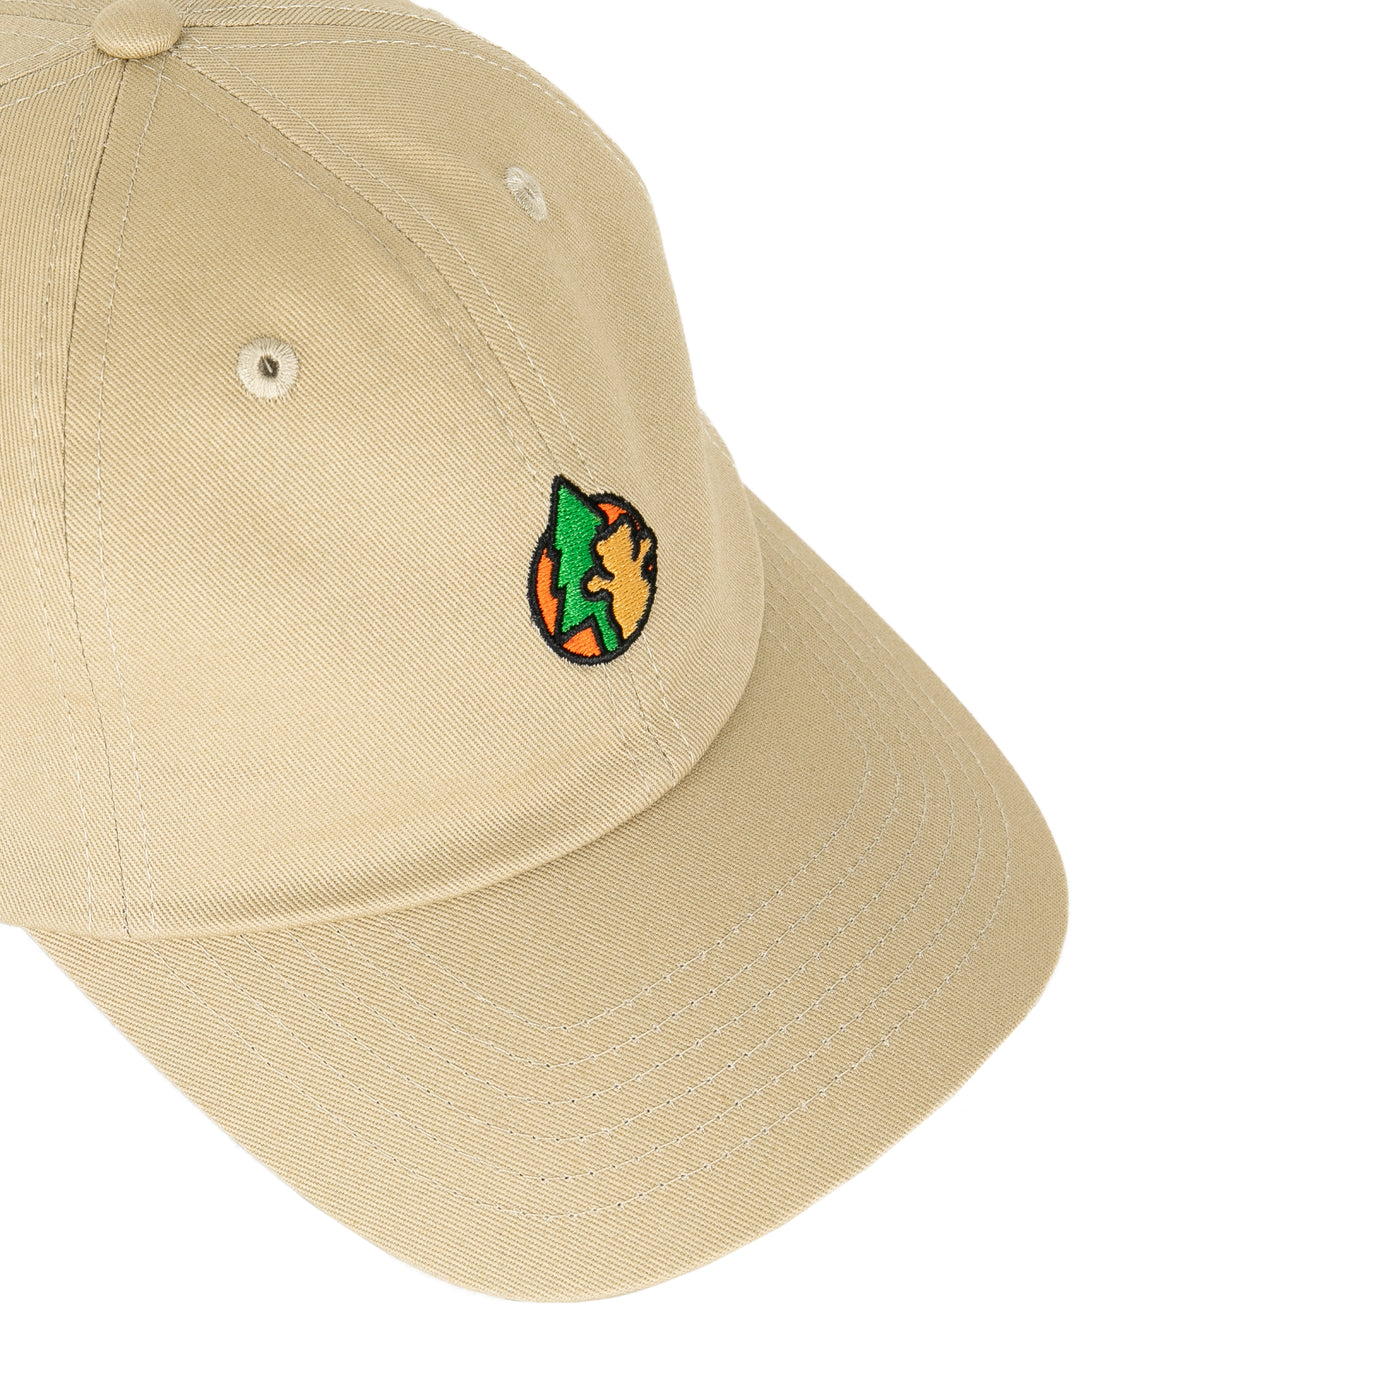 Evergreen Dad Hat - Khaki